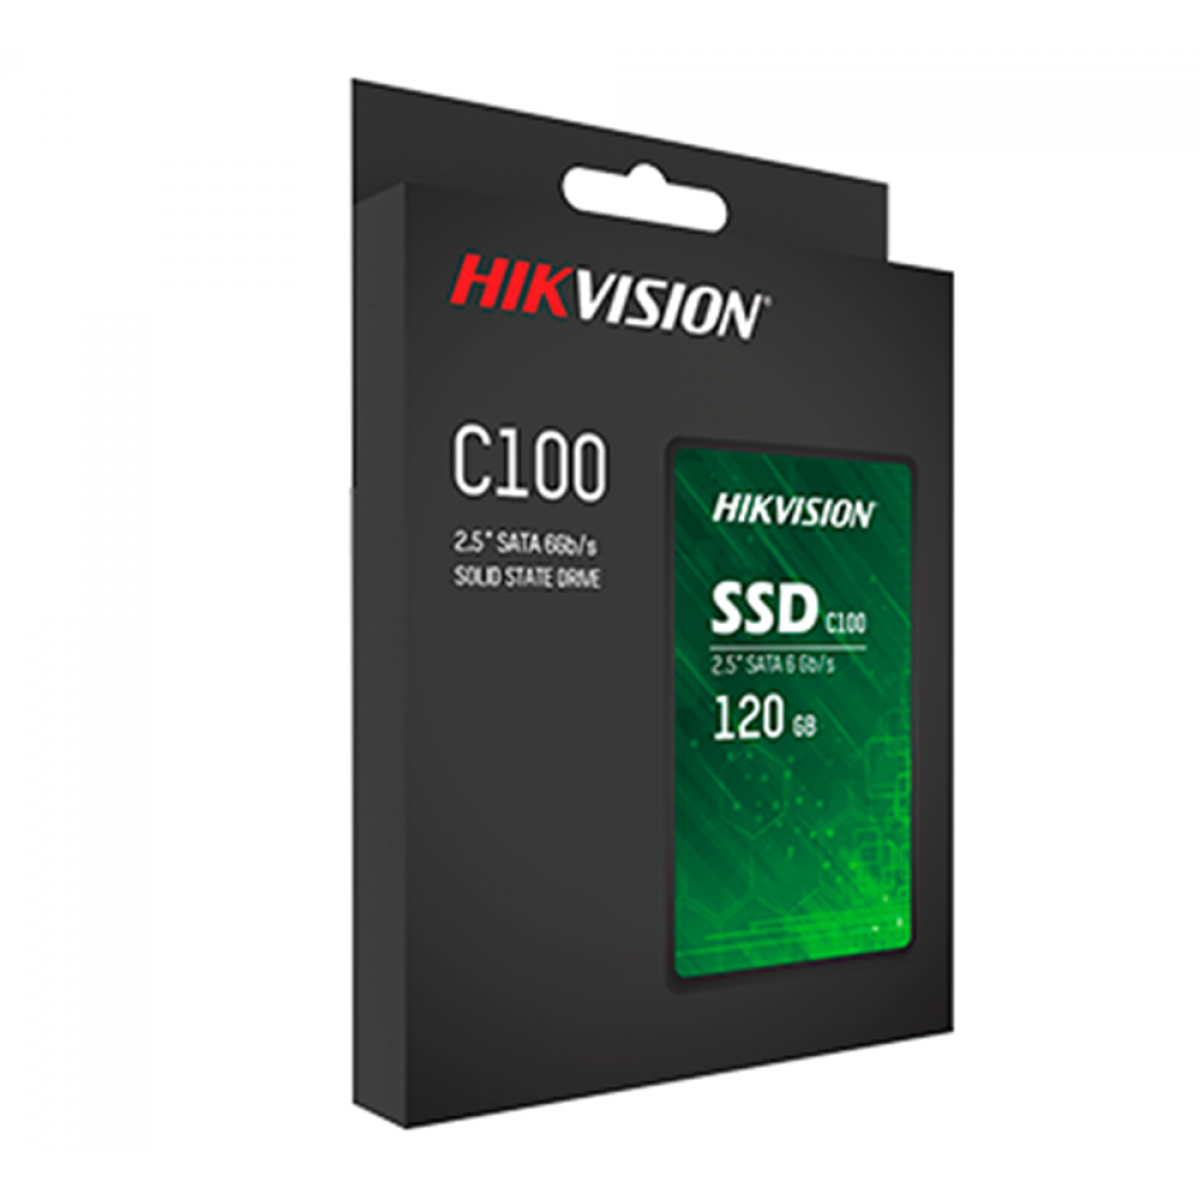 SSD Hikvision C100, 120GB, Sata III, Leitura 550MBs e Gravação 420MBs, HS-SSD-C100/120G